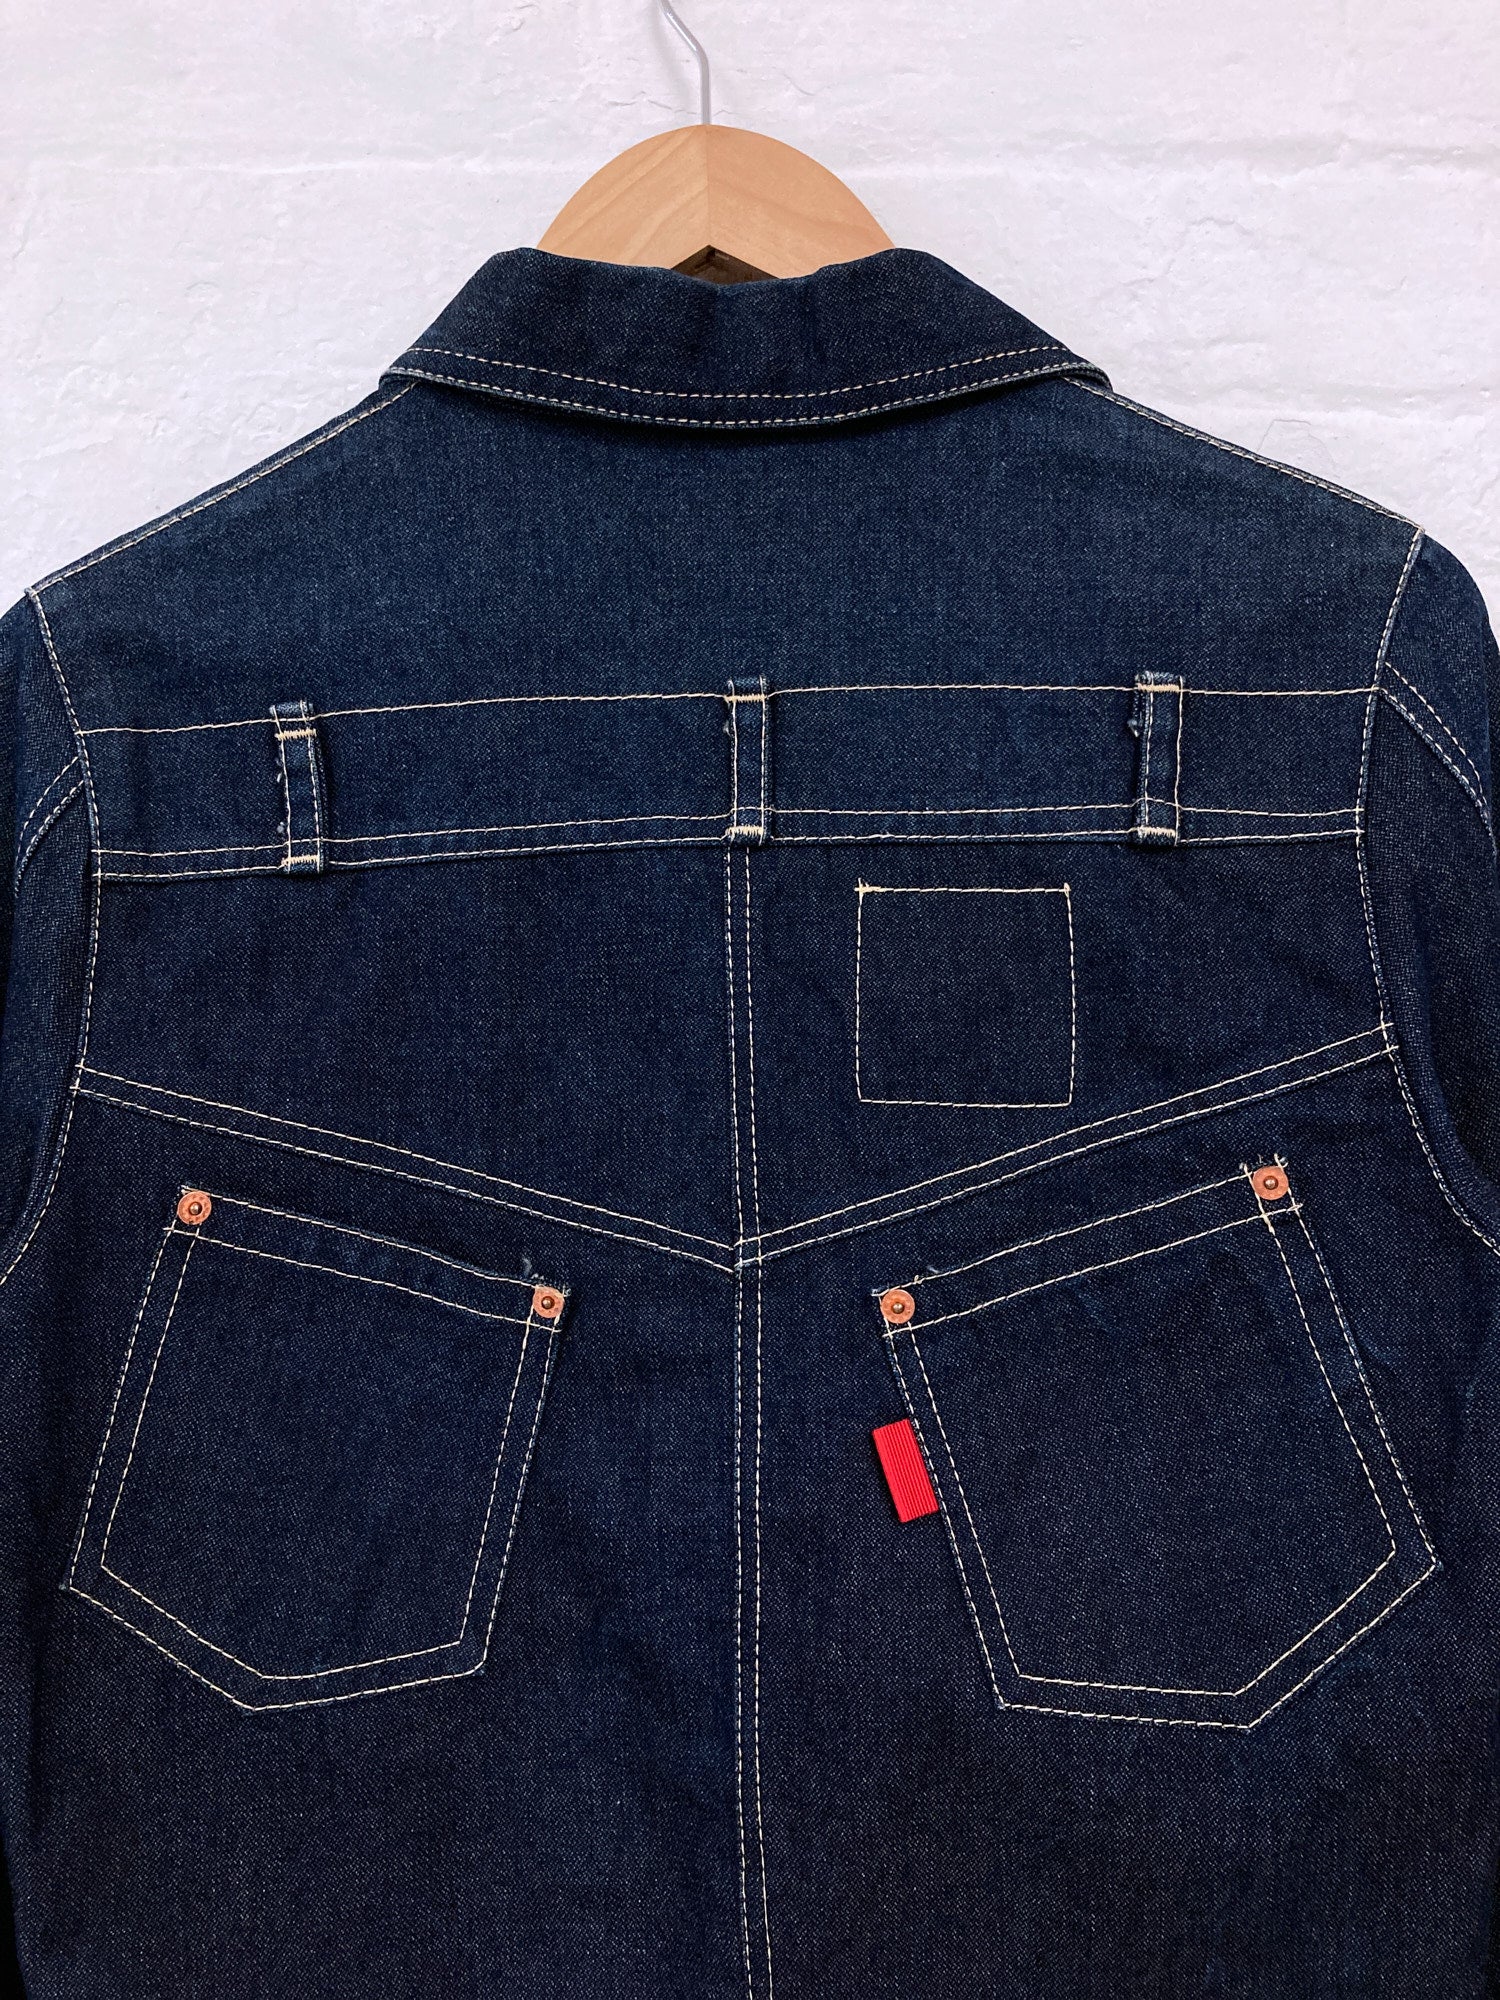 WooXoom Paris 1990s indigo cotton reconstructed denim jacket - 1 S